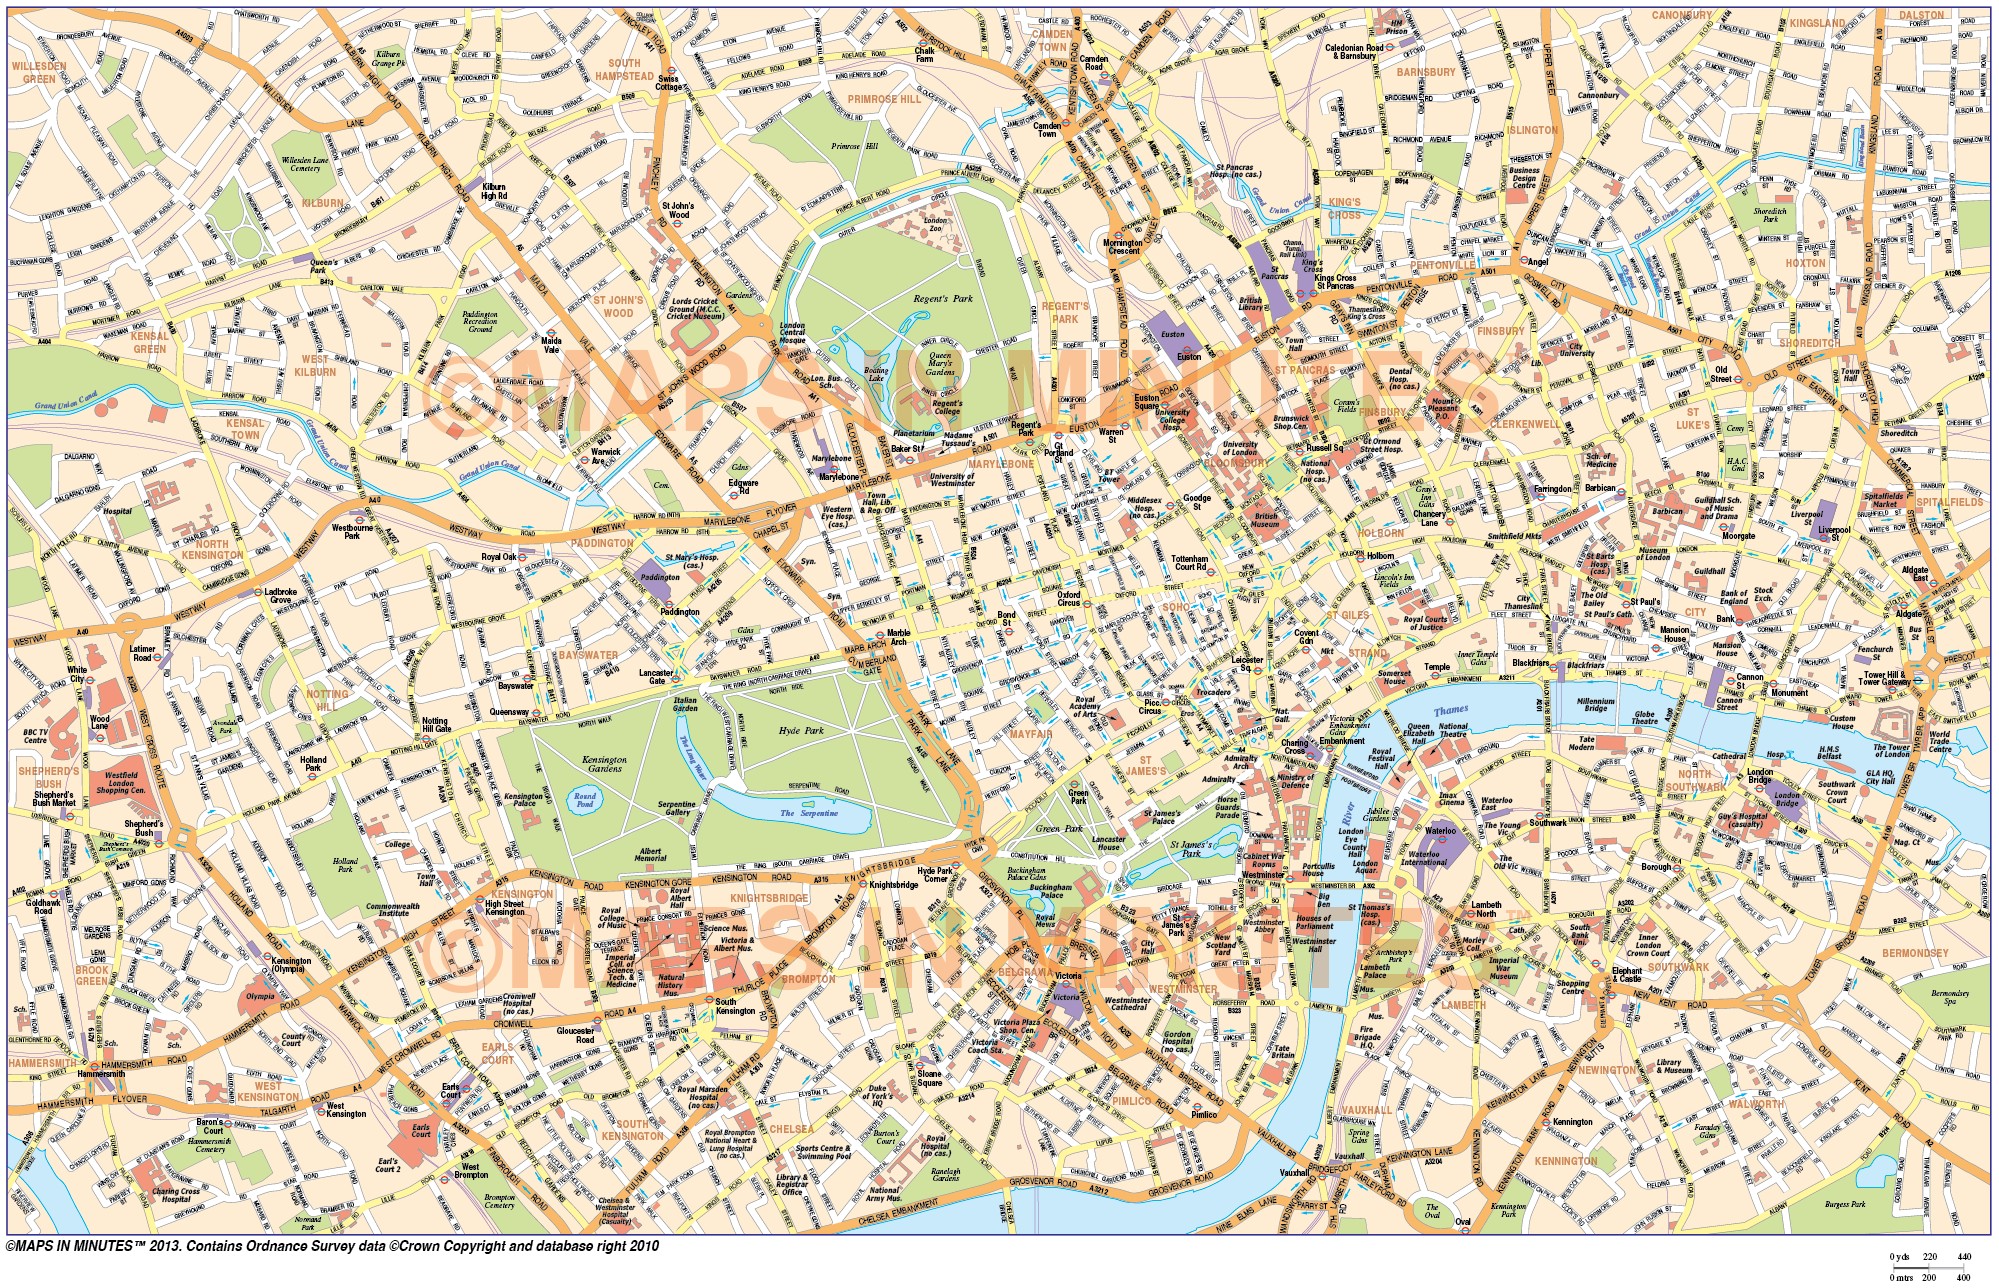 Digital Vector Map Of London In Illustrator Editable Format Royalty Free